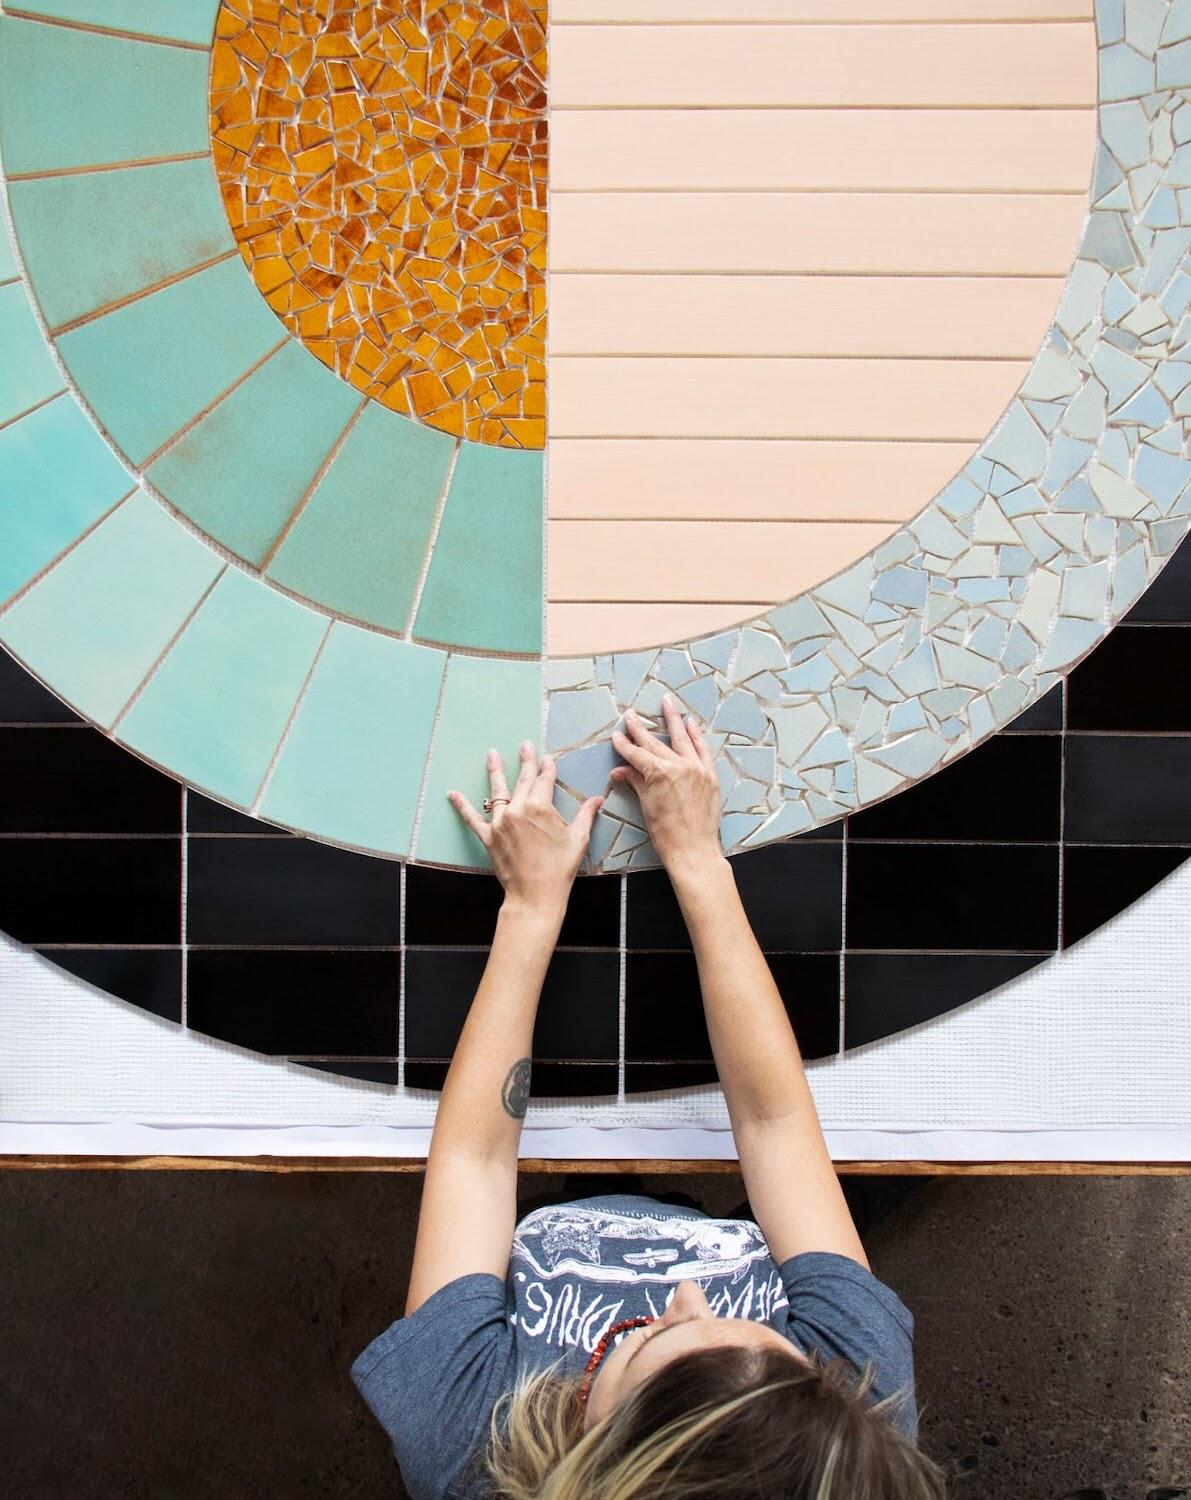 Maggie Morrison crafts a custom mosaic floor design